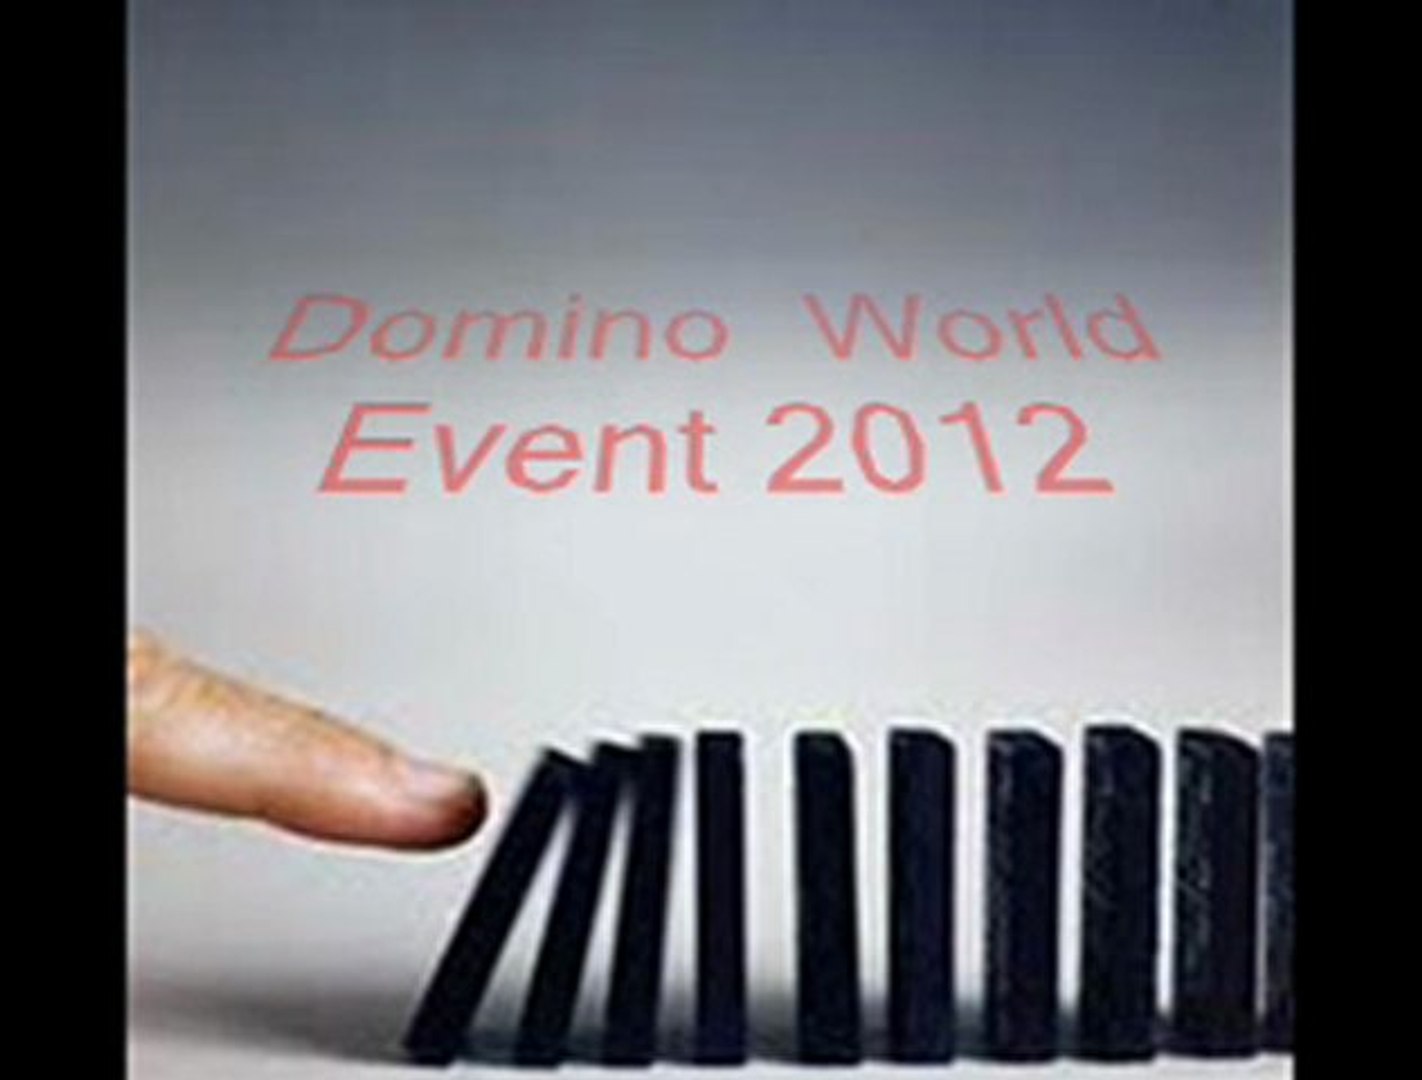 Domino World Event 2012